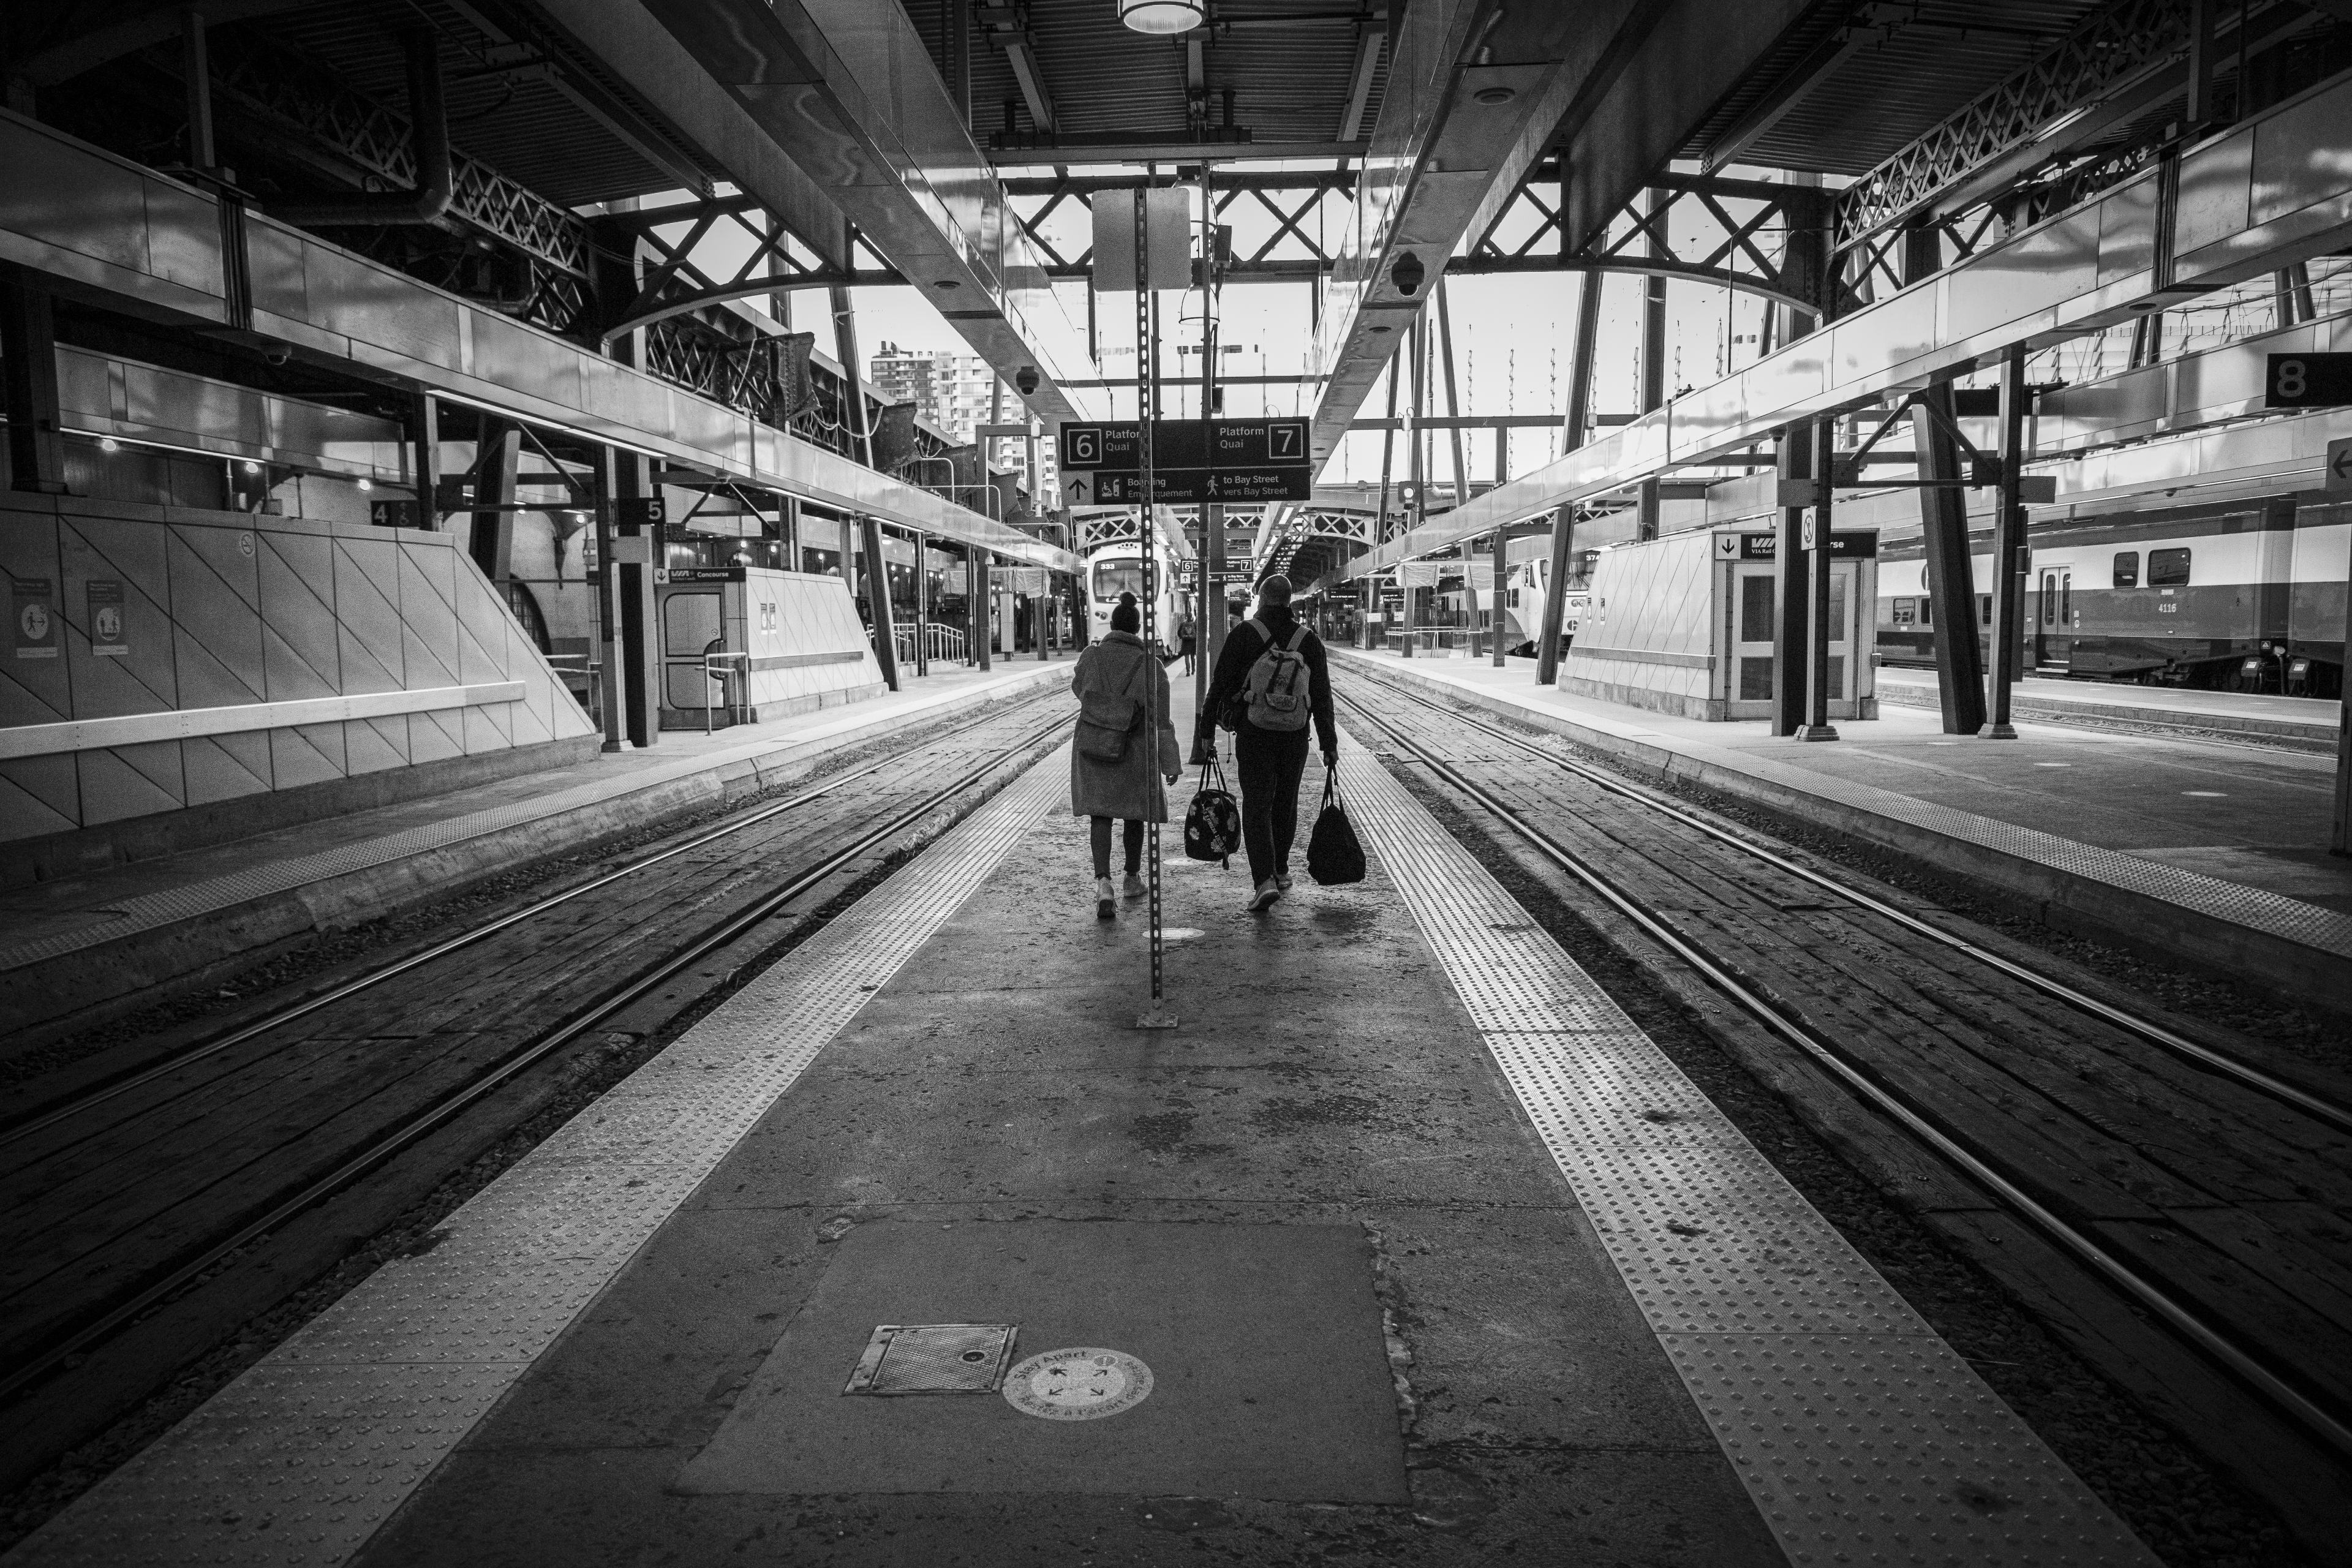 A couple walks along a platform.